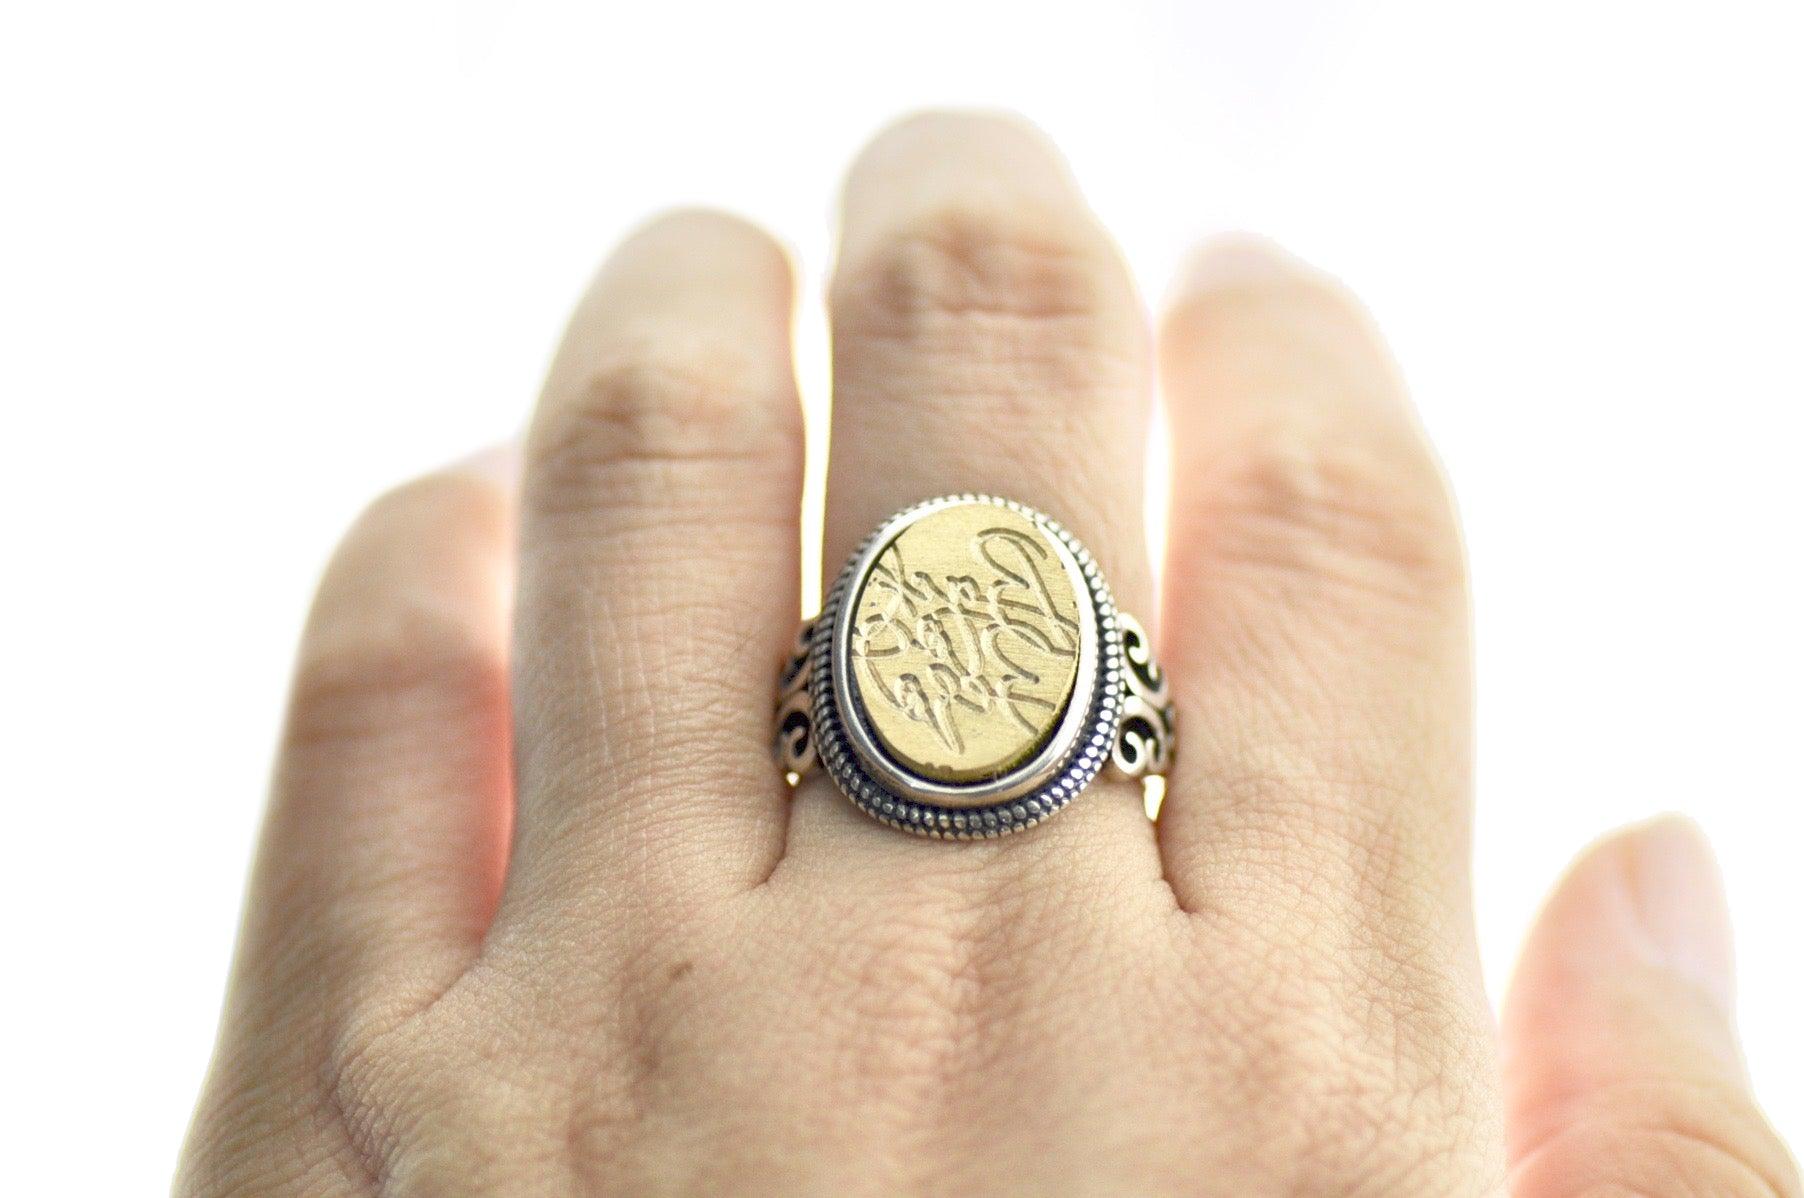 Design your own 12x16mm Filigree Signet Ring - Backtozero B20 - 1216f, 12x16mm, 12x16mm ring, accessory, bespoke, Custom, customsignet, Design Your Own, her, him, jewelry, logo, oval, oval ring, ring, signet ring, size 10, size 11, size 6, size 7, size 8, size 9, wax seal, wax seal stamp